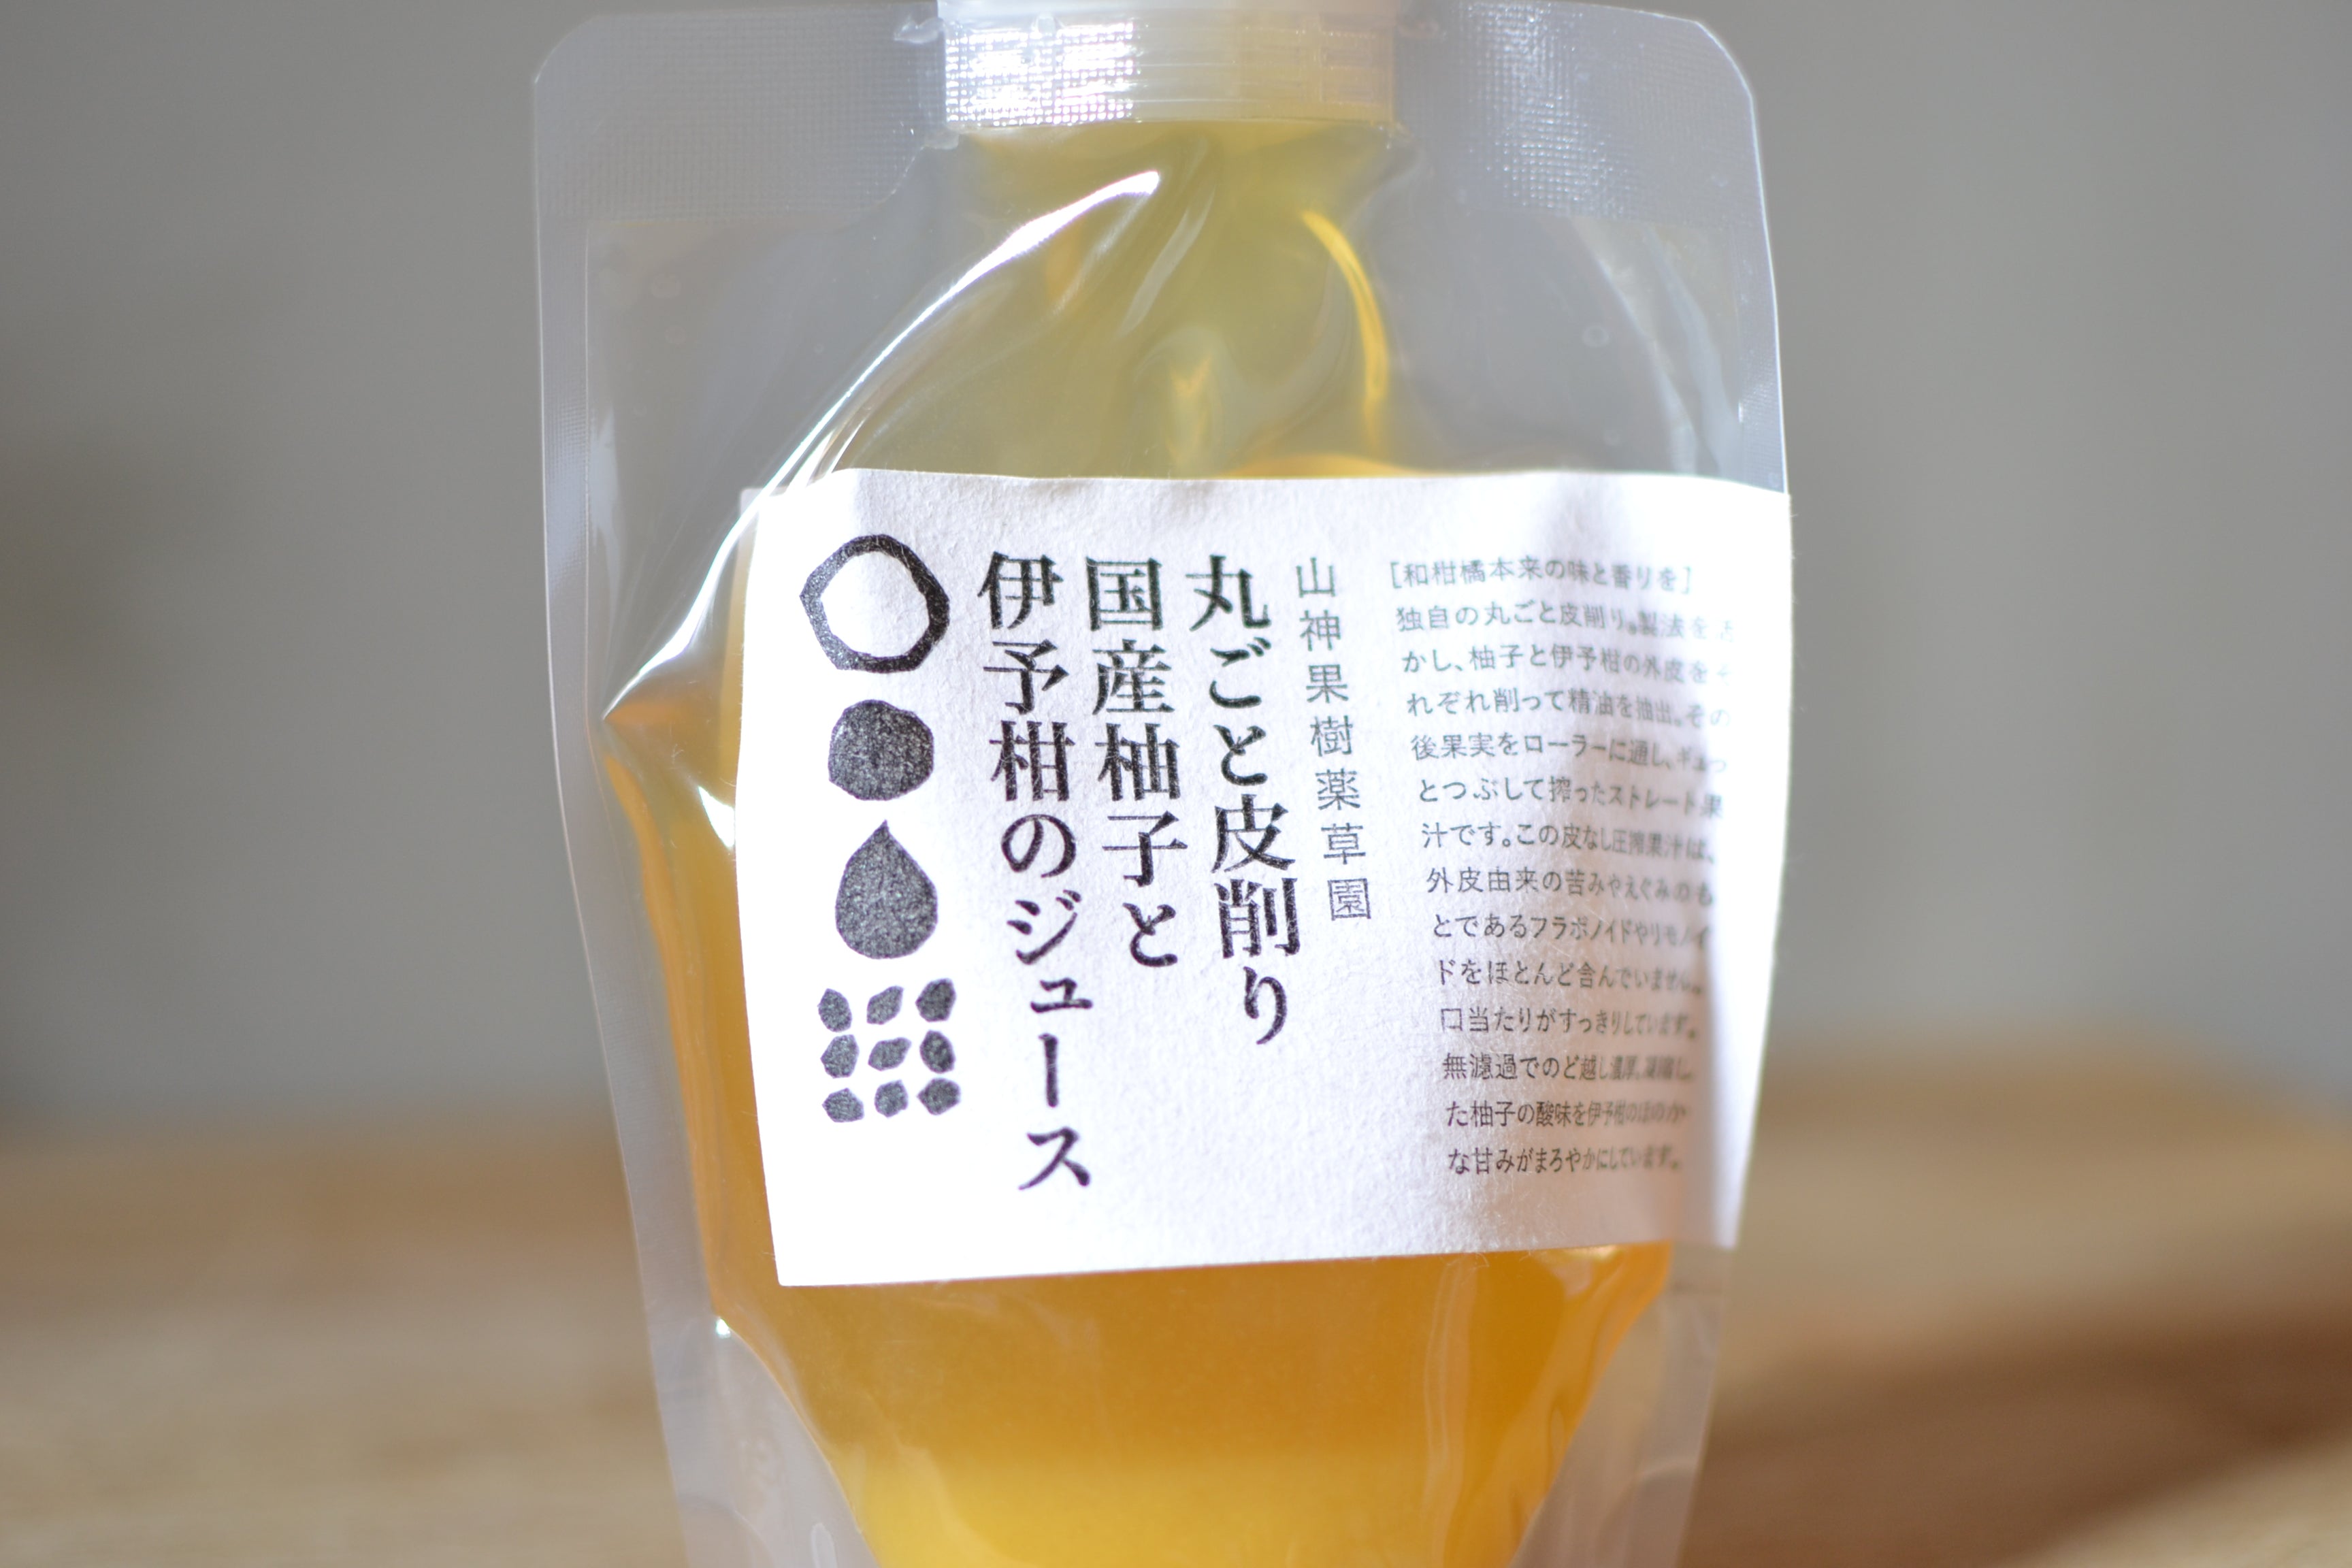 ❤︎丸ごと皮削り柚子と伊予柑のジュース 200ml MARKS&amp;WEB 松山油脂の山神果樹薬草園